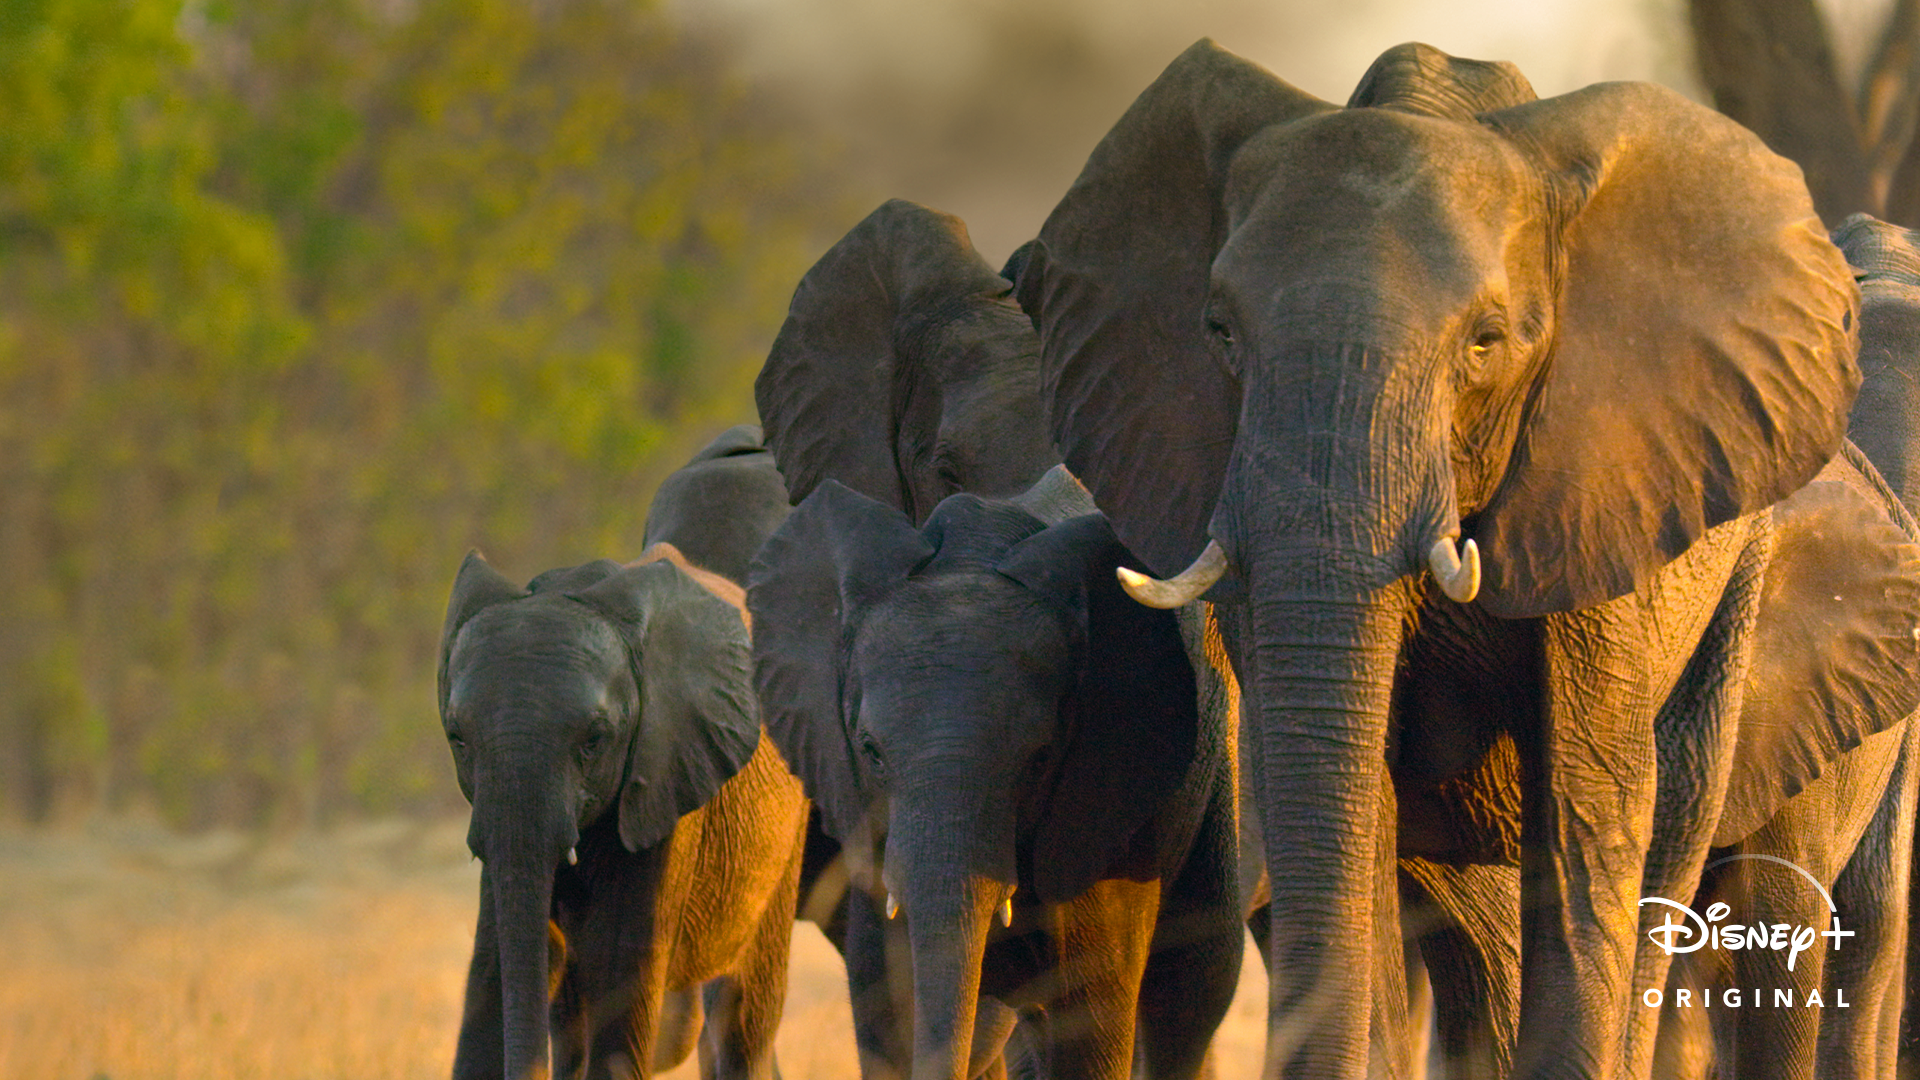 Filmbeschreibung zu Elefanten